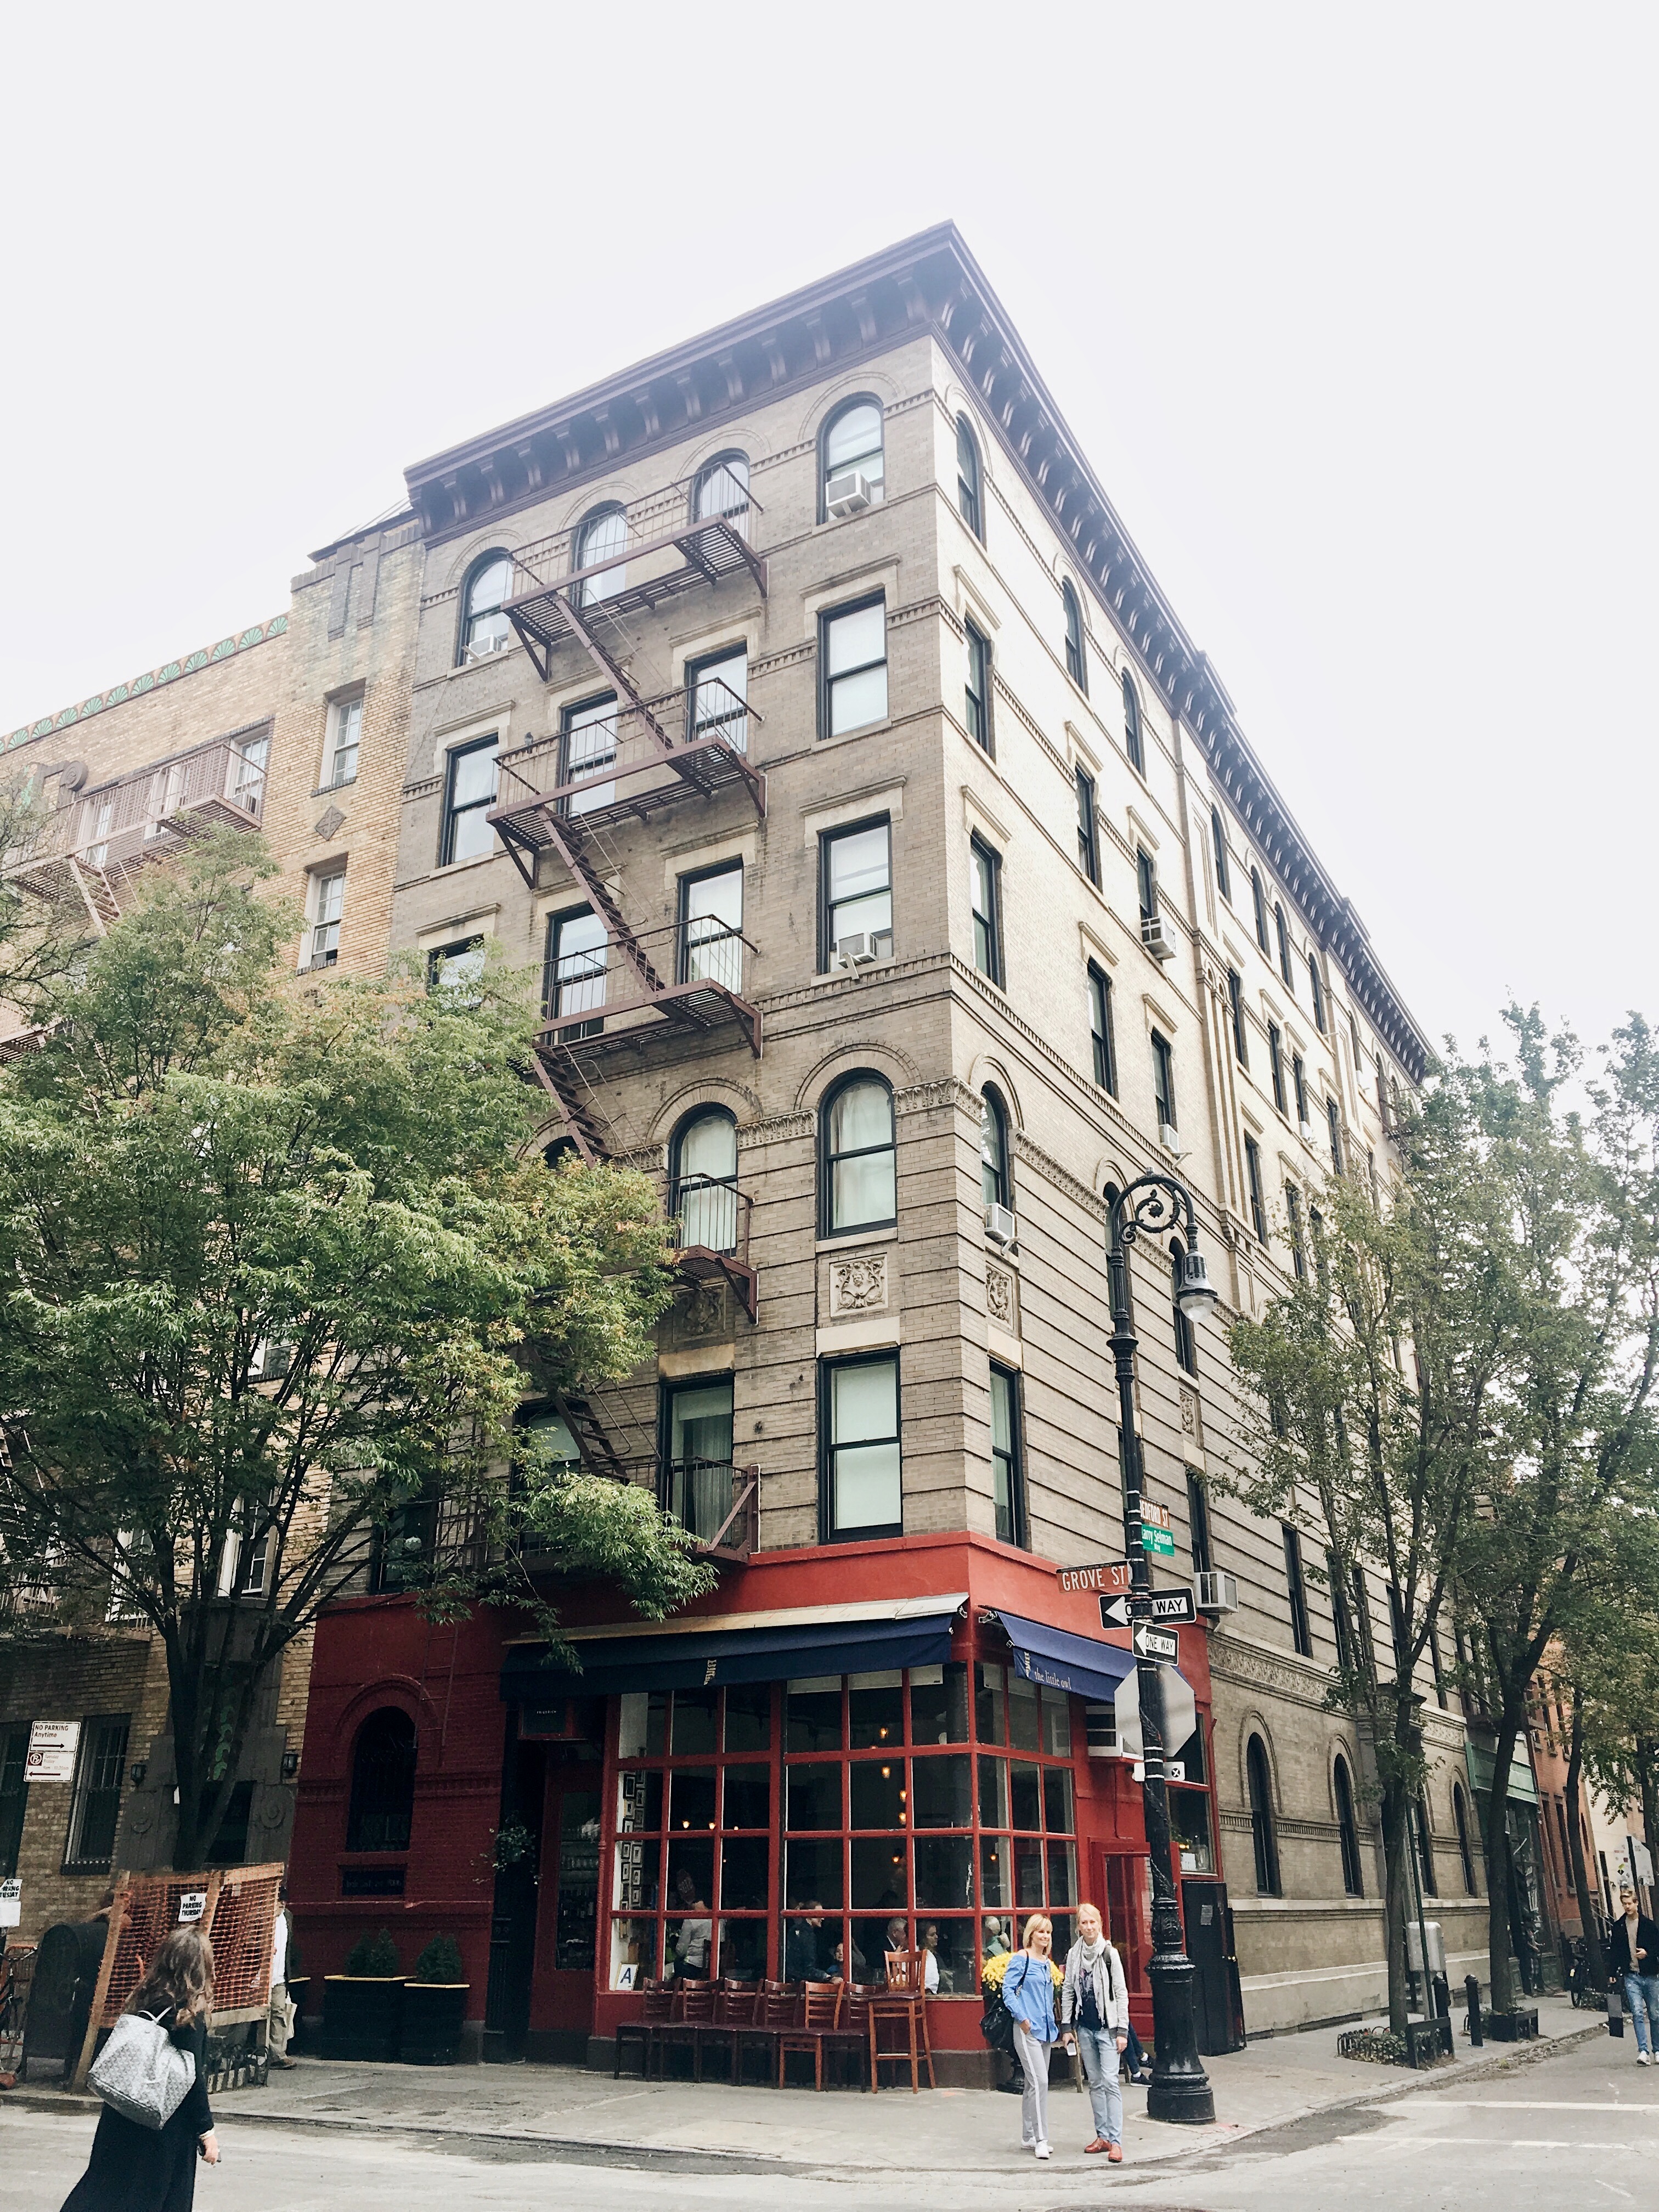 NYC Trip Recap | October 2017 - The Friends Building 